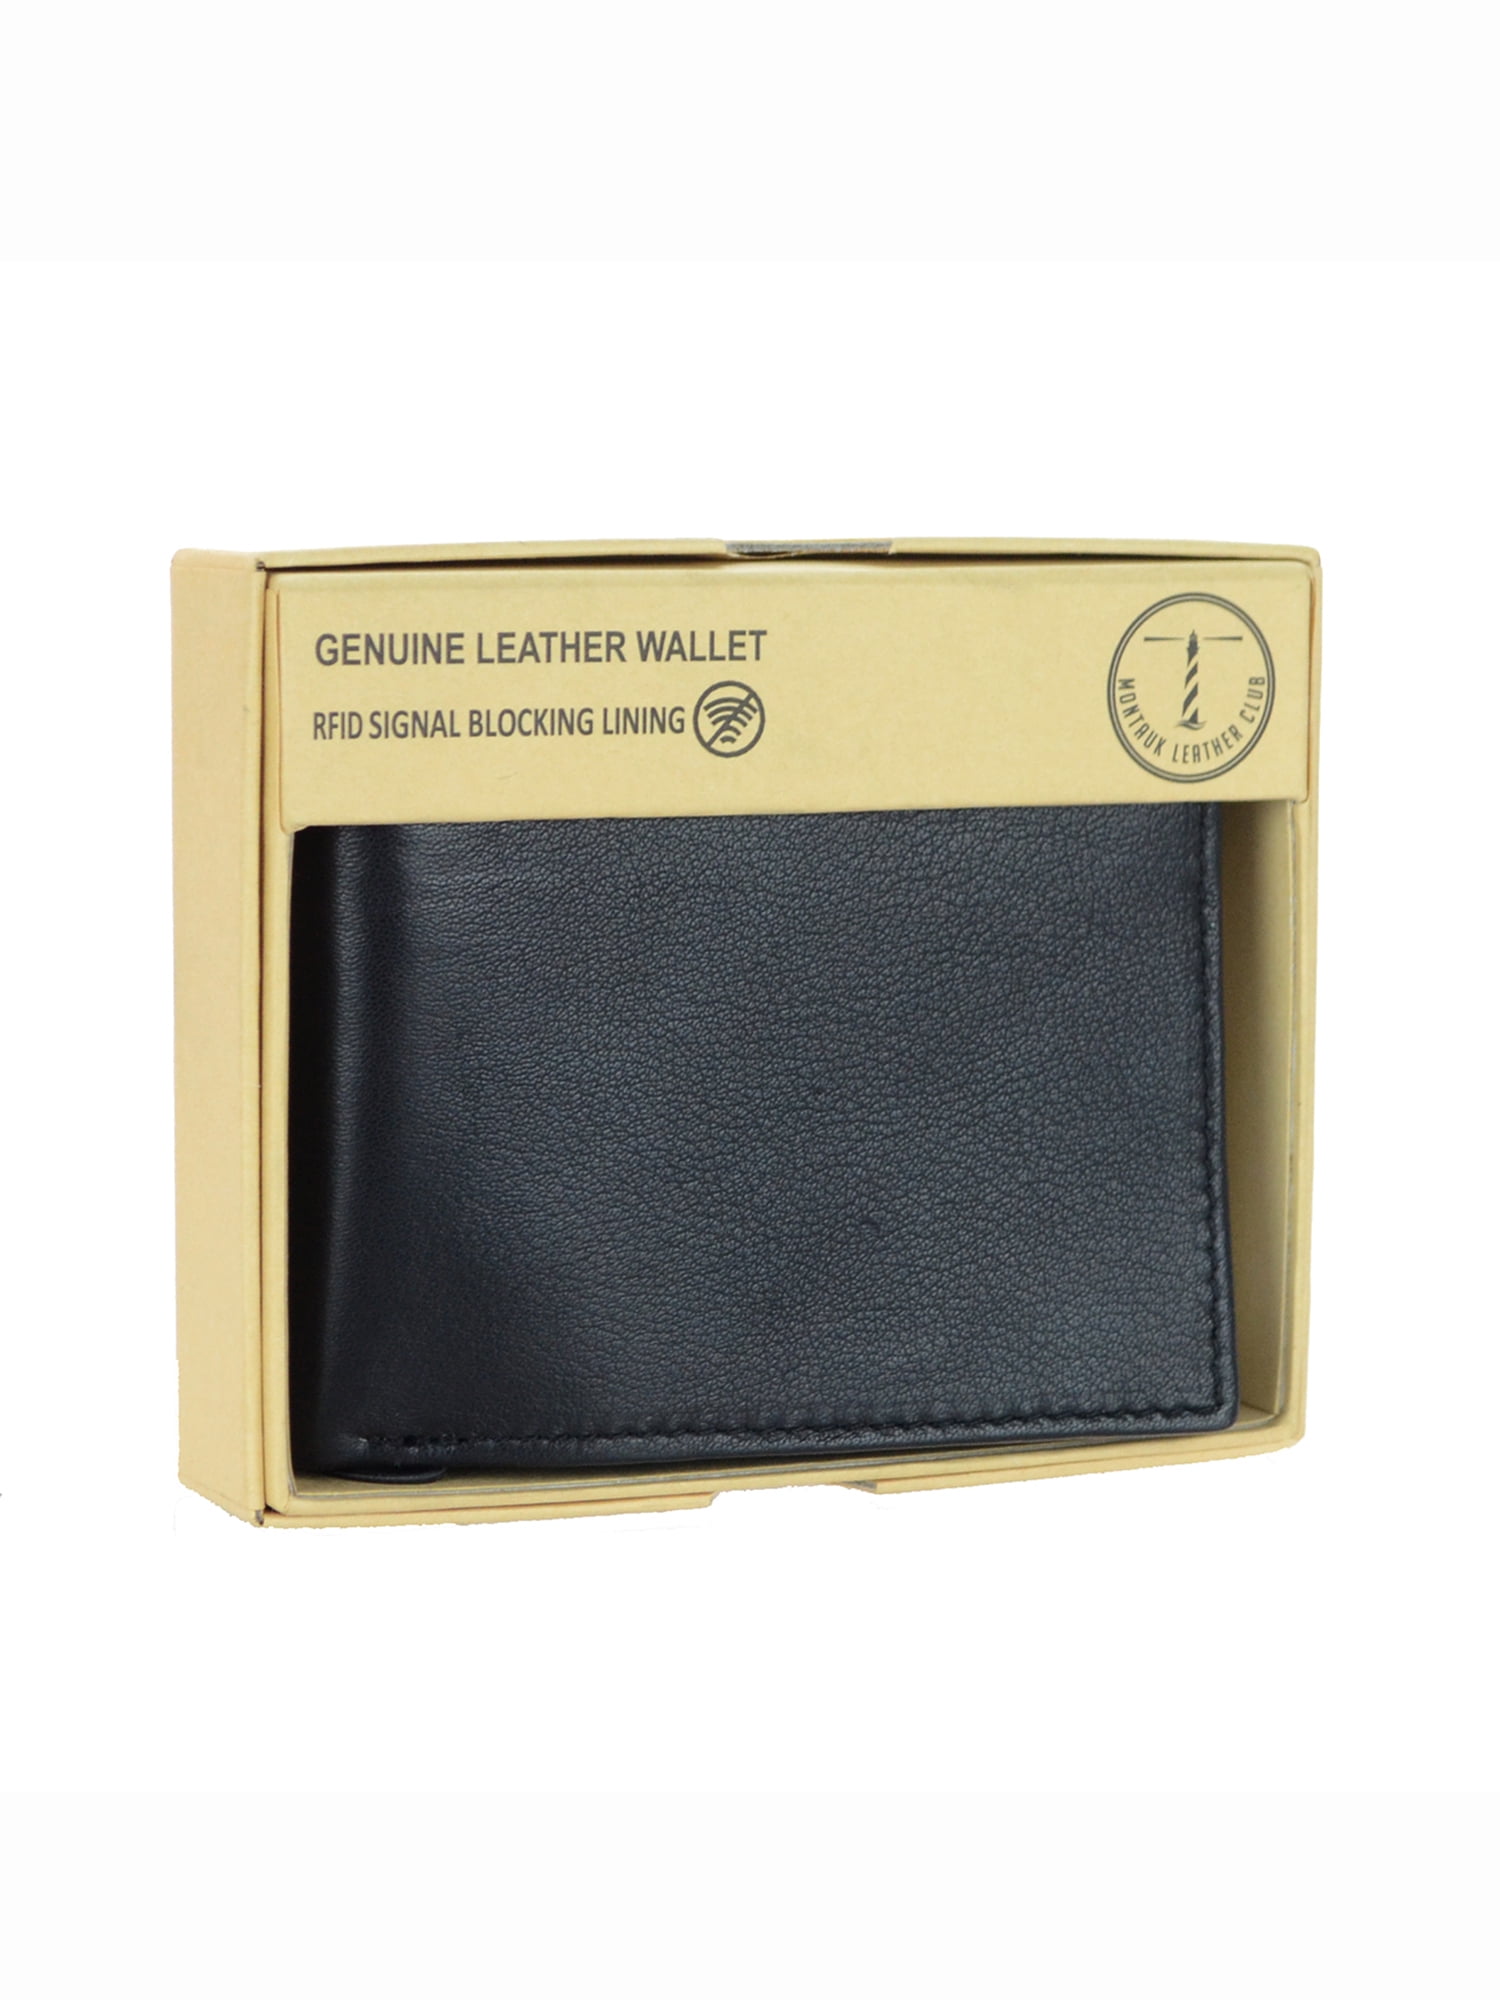 Mens Leather Bi-Fold Wallet with DRUMMER/ DRUM SET Image *Great Gift* 